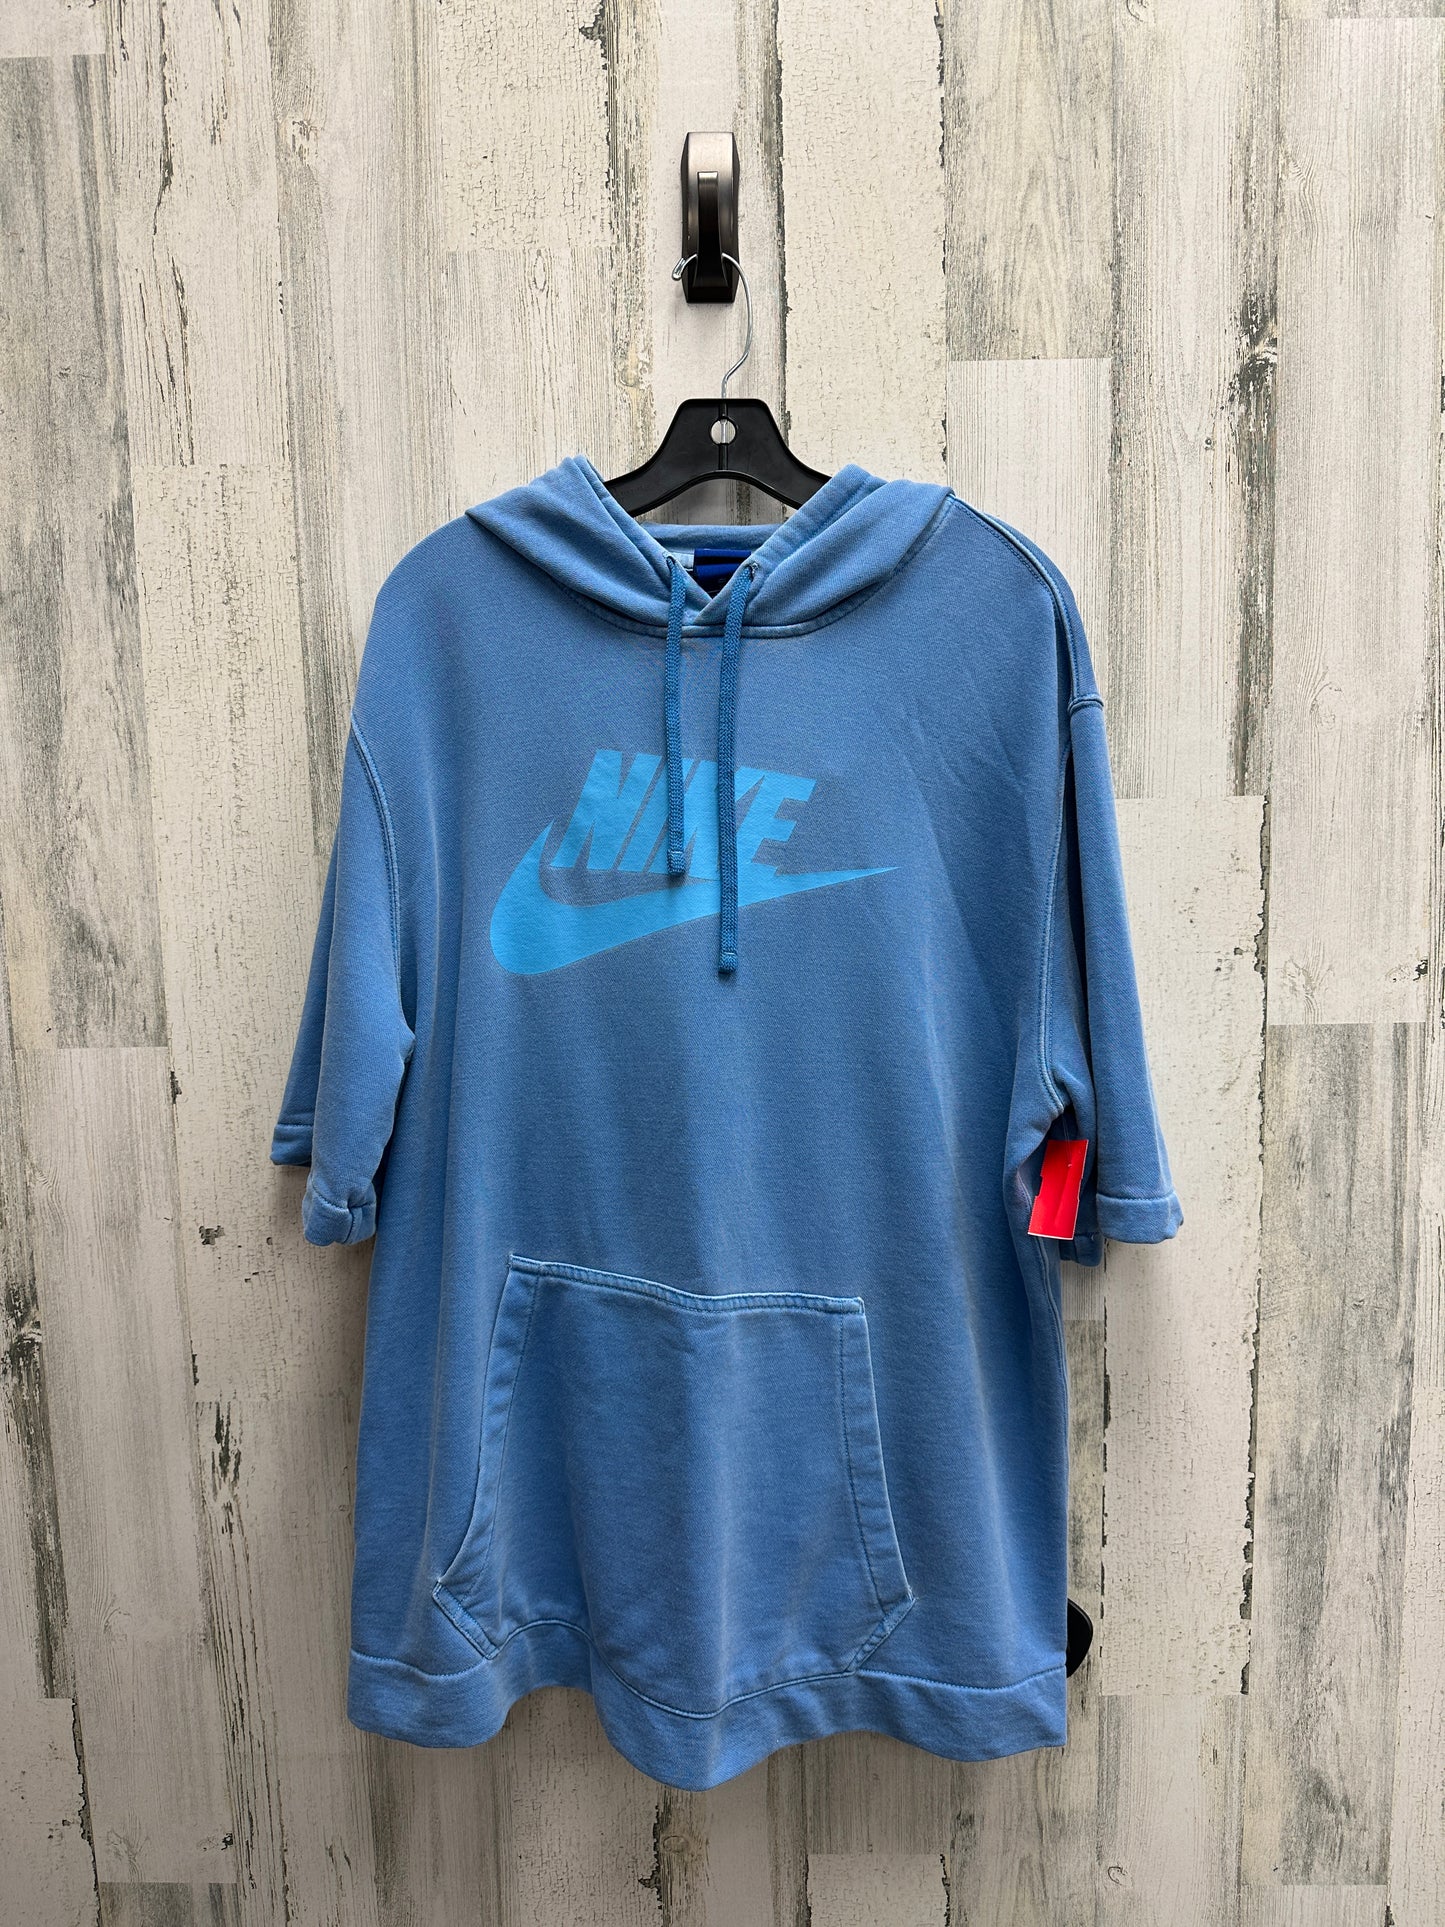 Athletic Sweatshirt Hoodie By Nike Apparel  Size: Xl